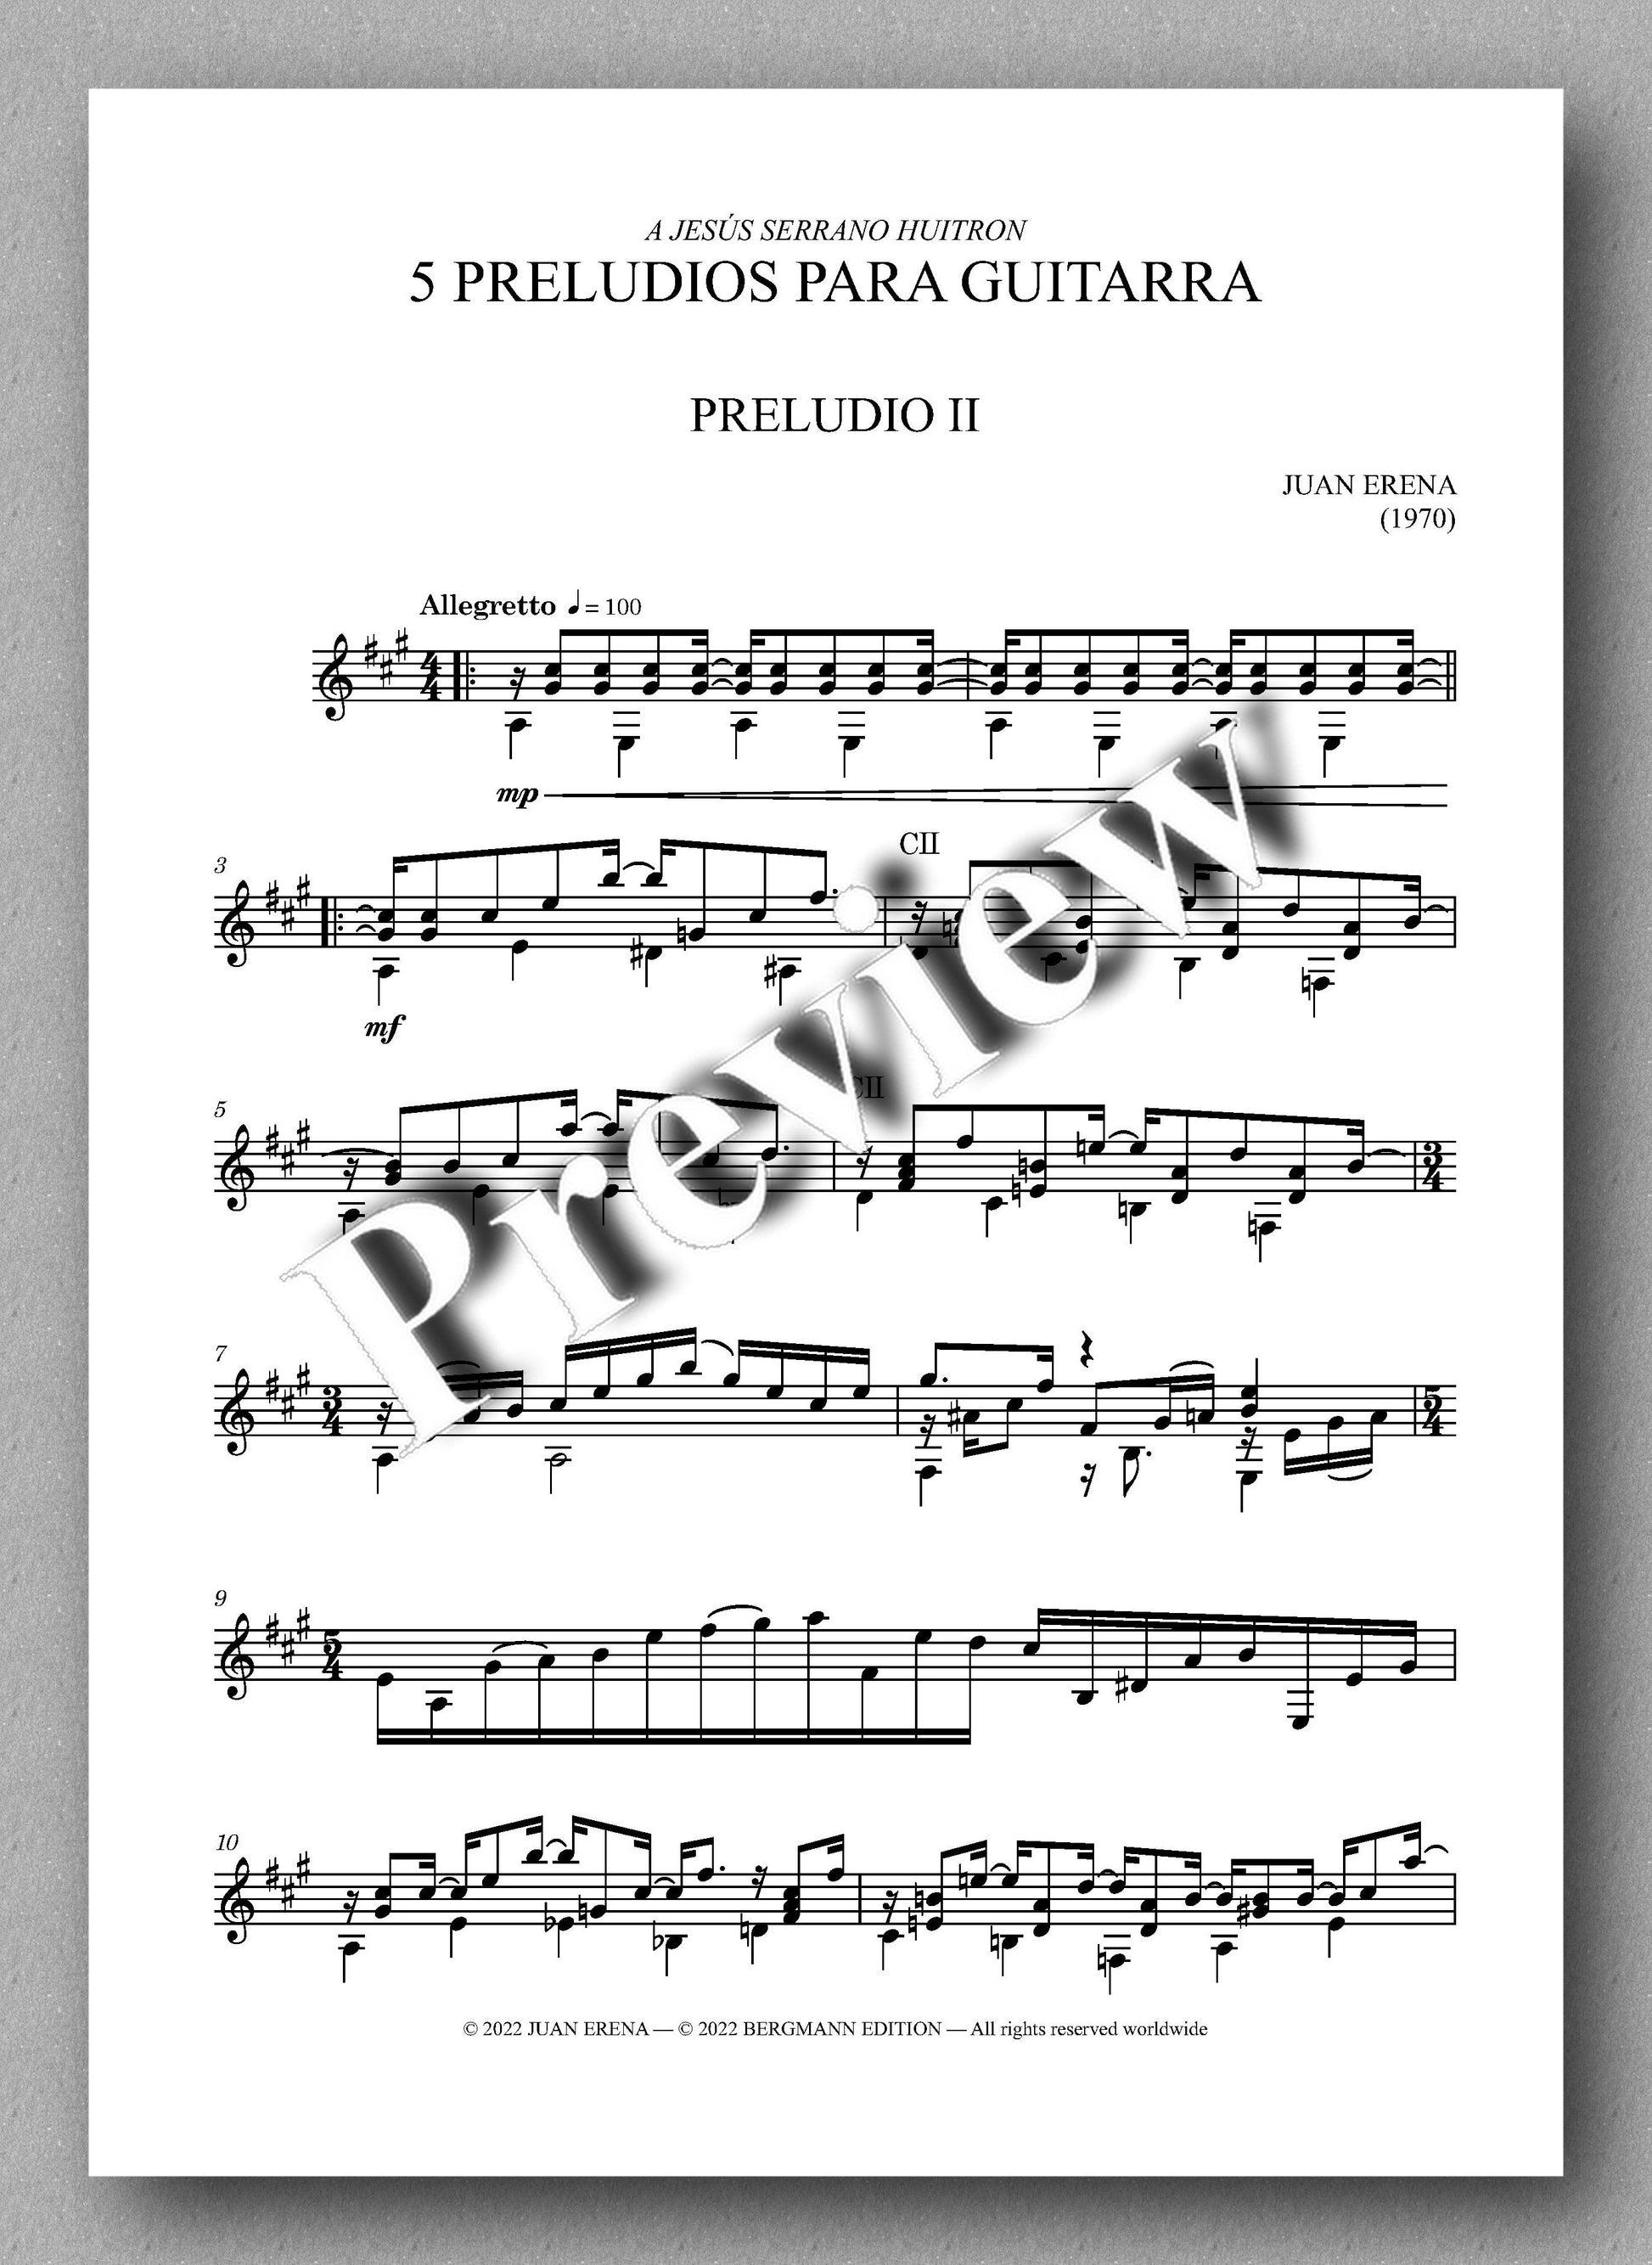 Juan Erena, PRELUDIO II - preview of the music score